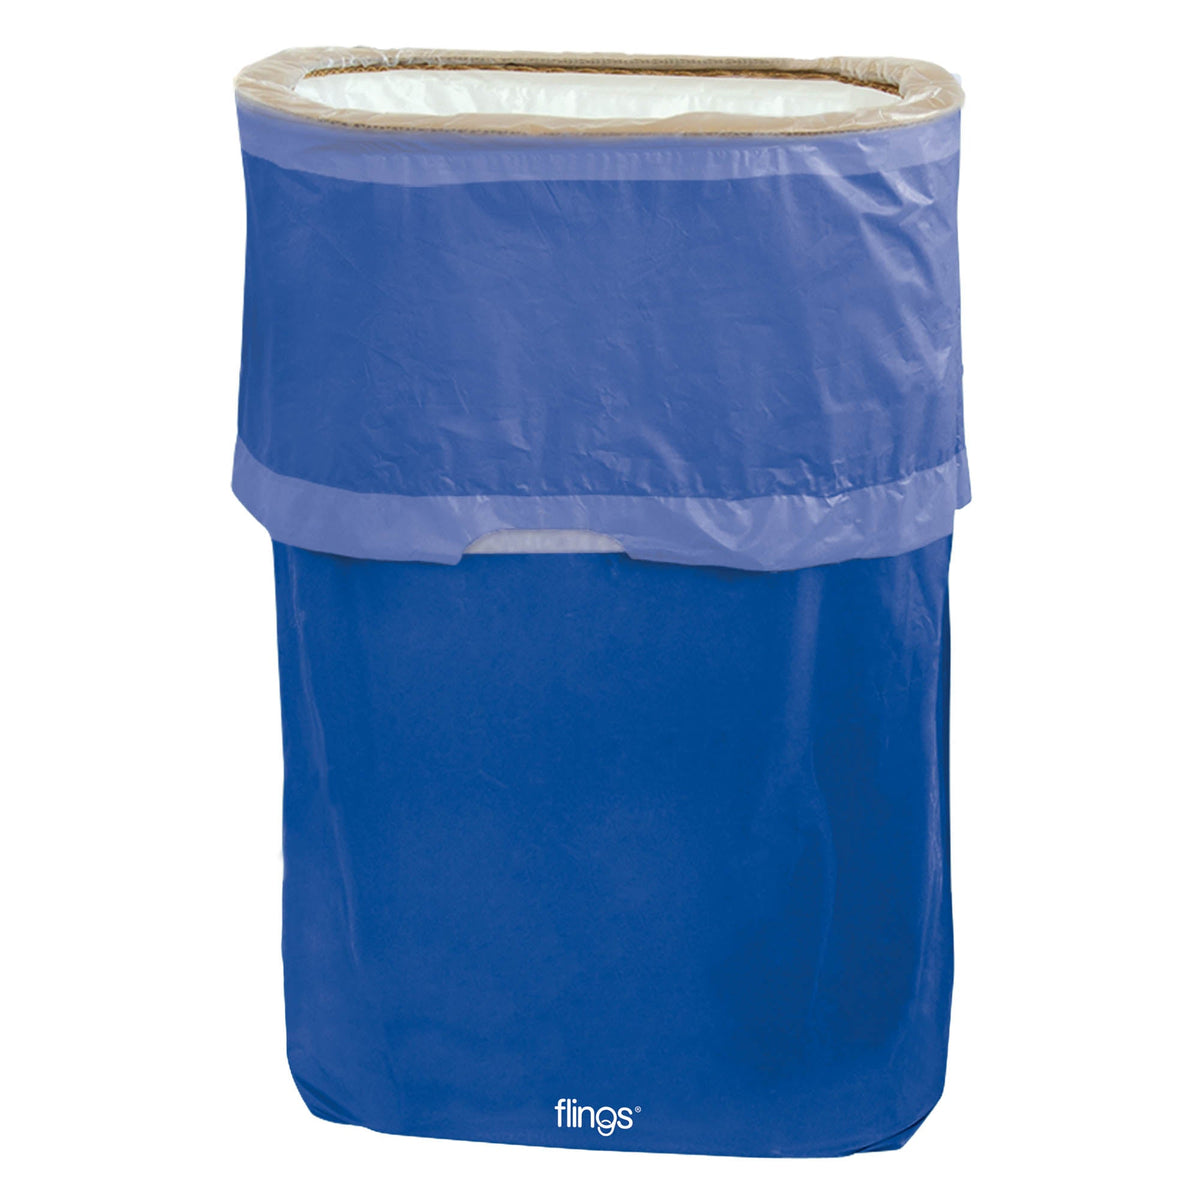 Bright Royal Blue Flings Pop-up Disposable Trash Bin